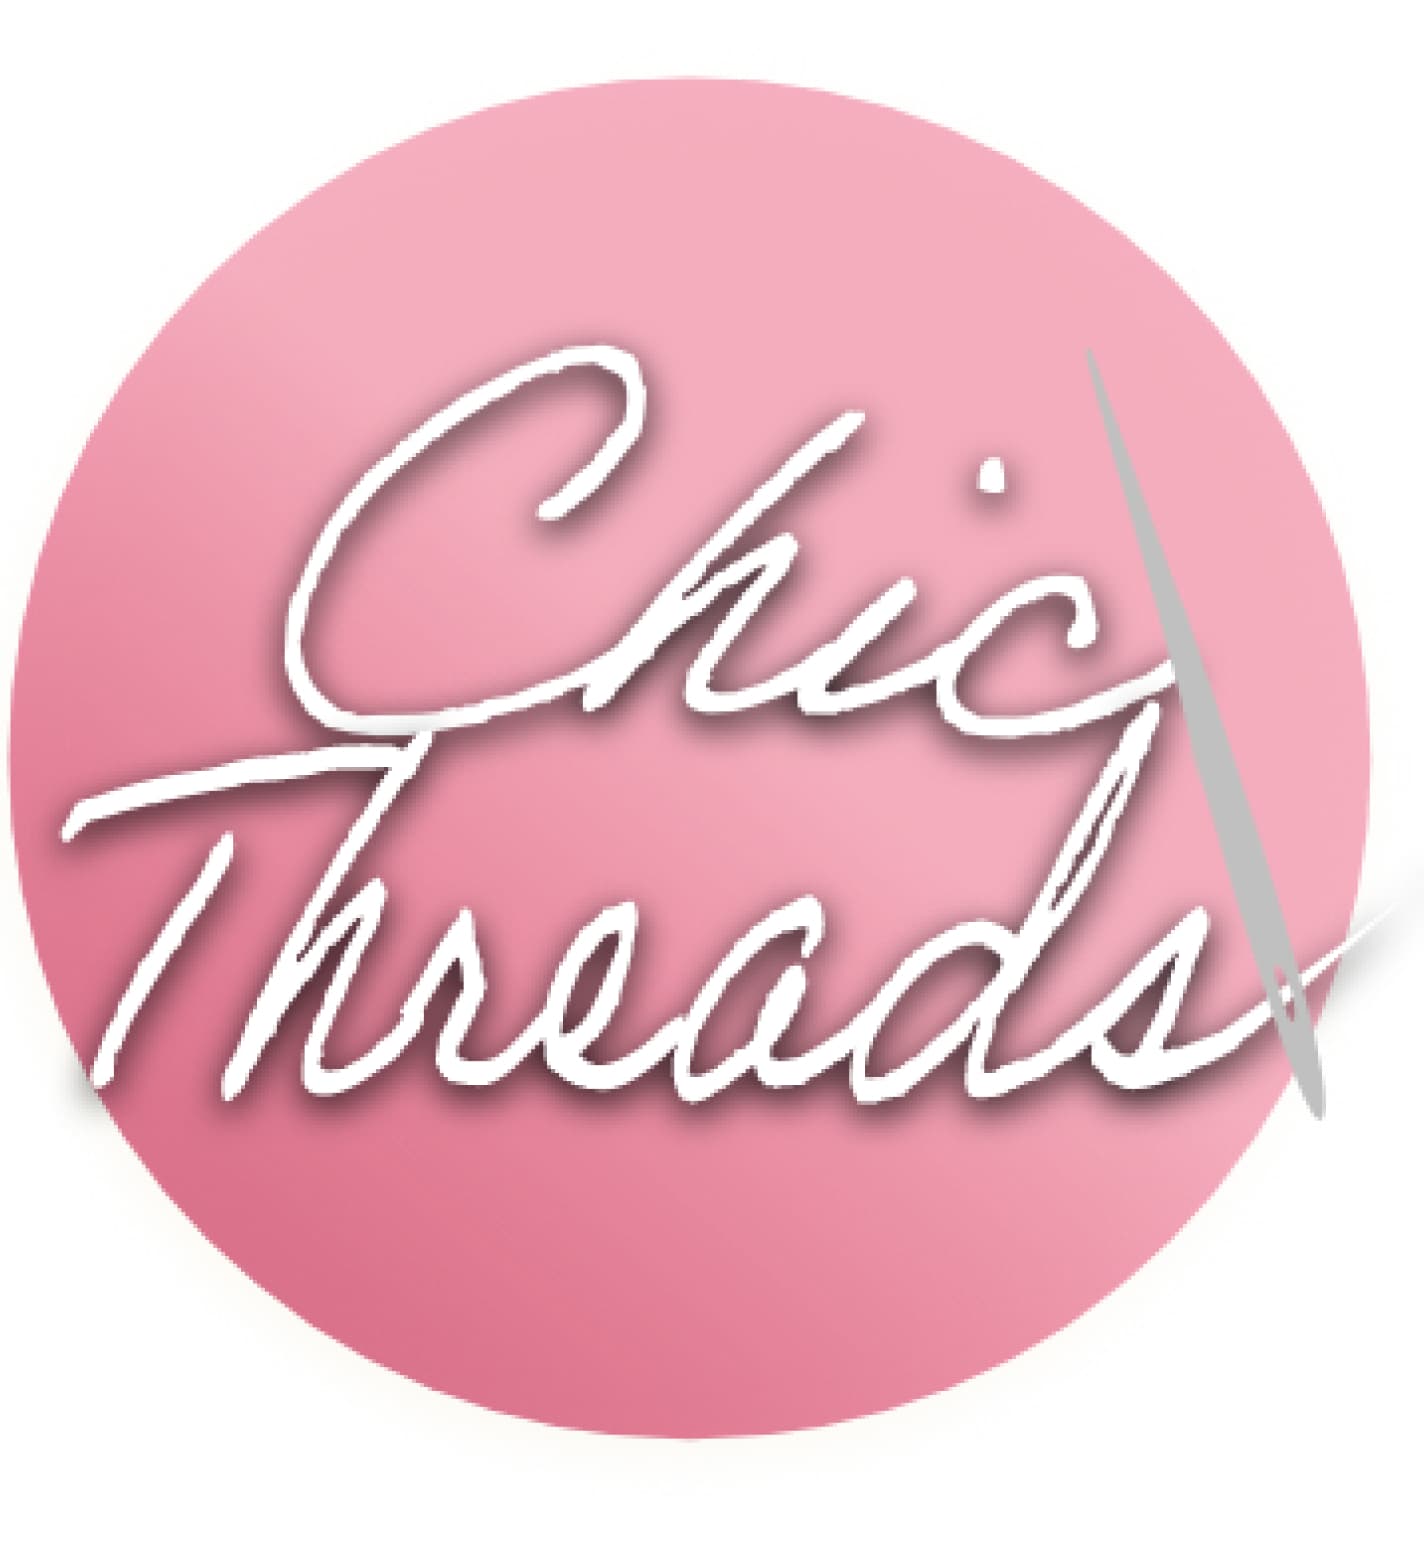 Chic Threads title